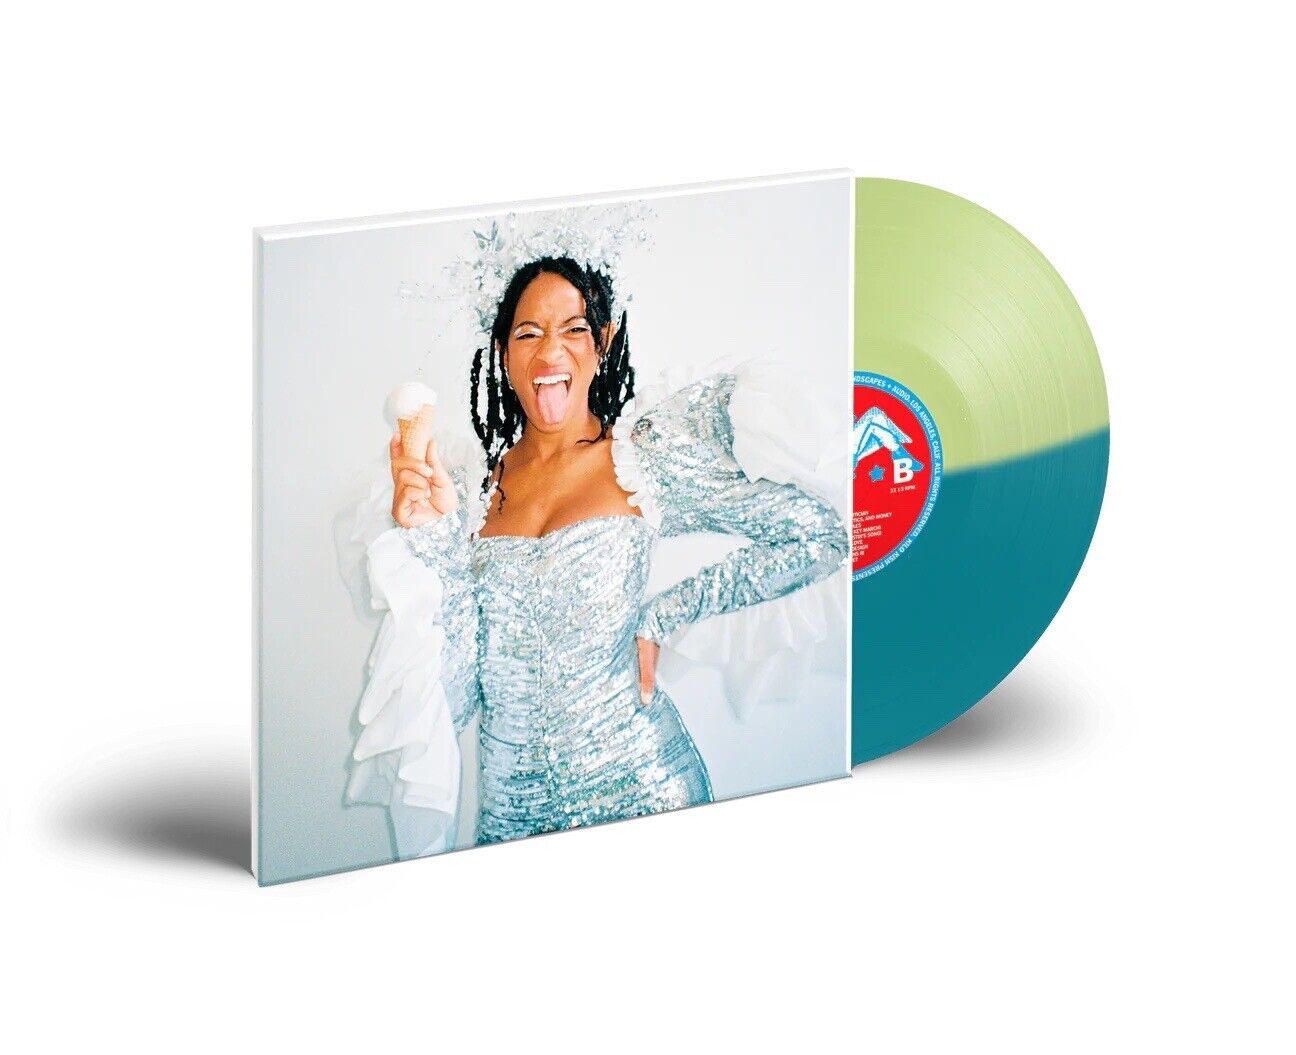 American Gurl by Kilo Kish Exclusive Blue/Lime split vinyl record. Unopened